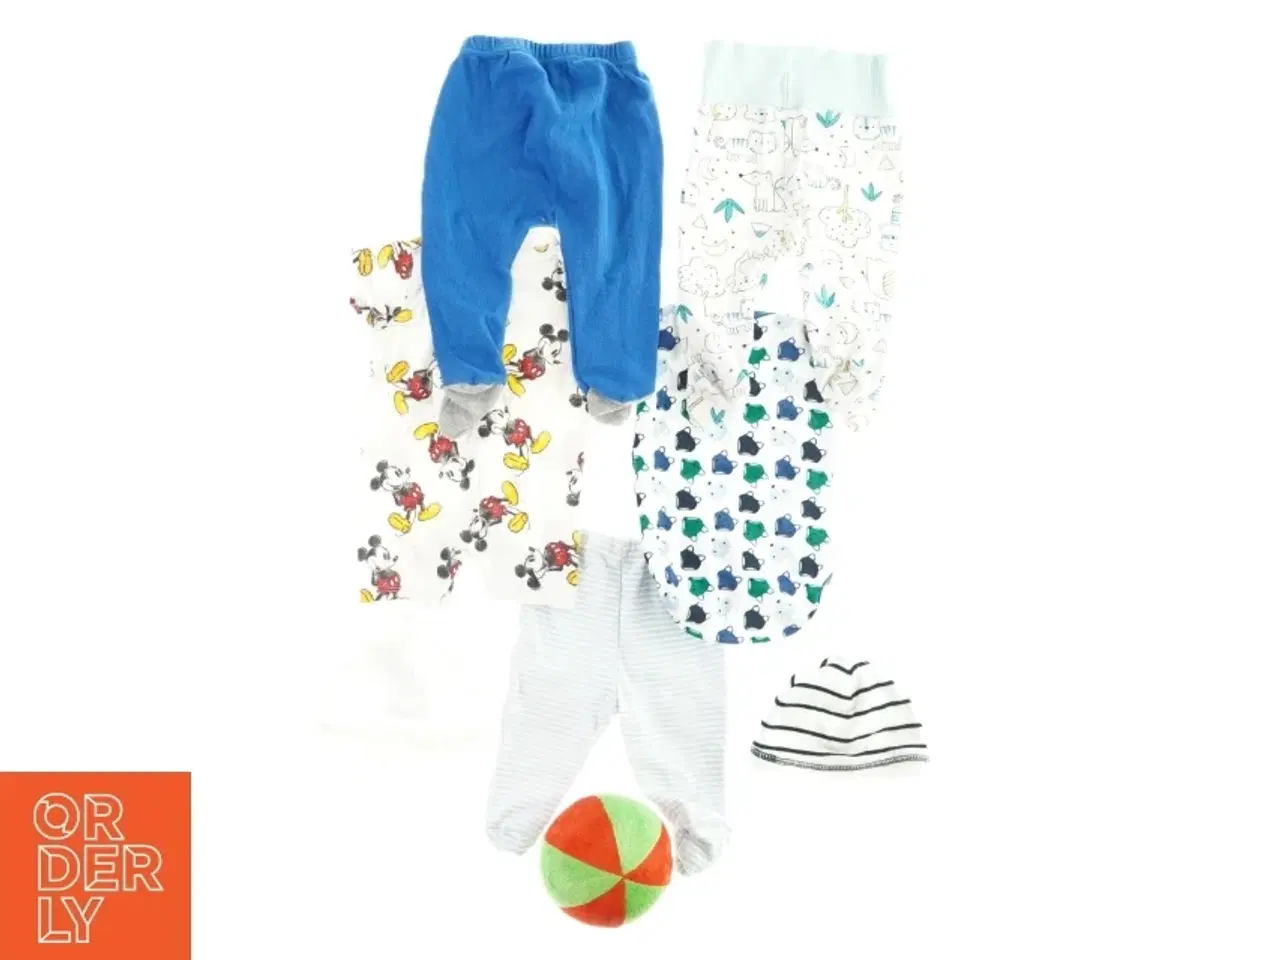 Billede 2 - Babytøj, 3 bukser, 2 bodystockings, 2 huer og en bold